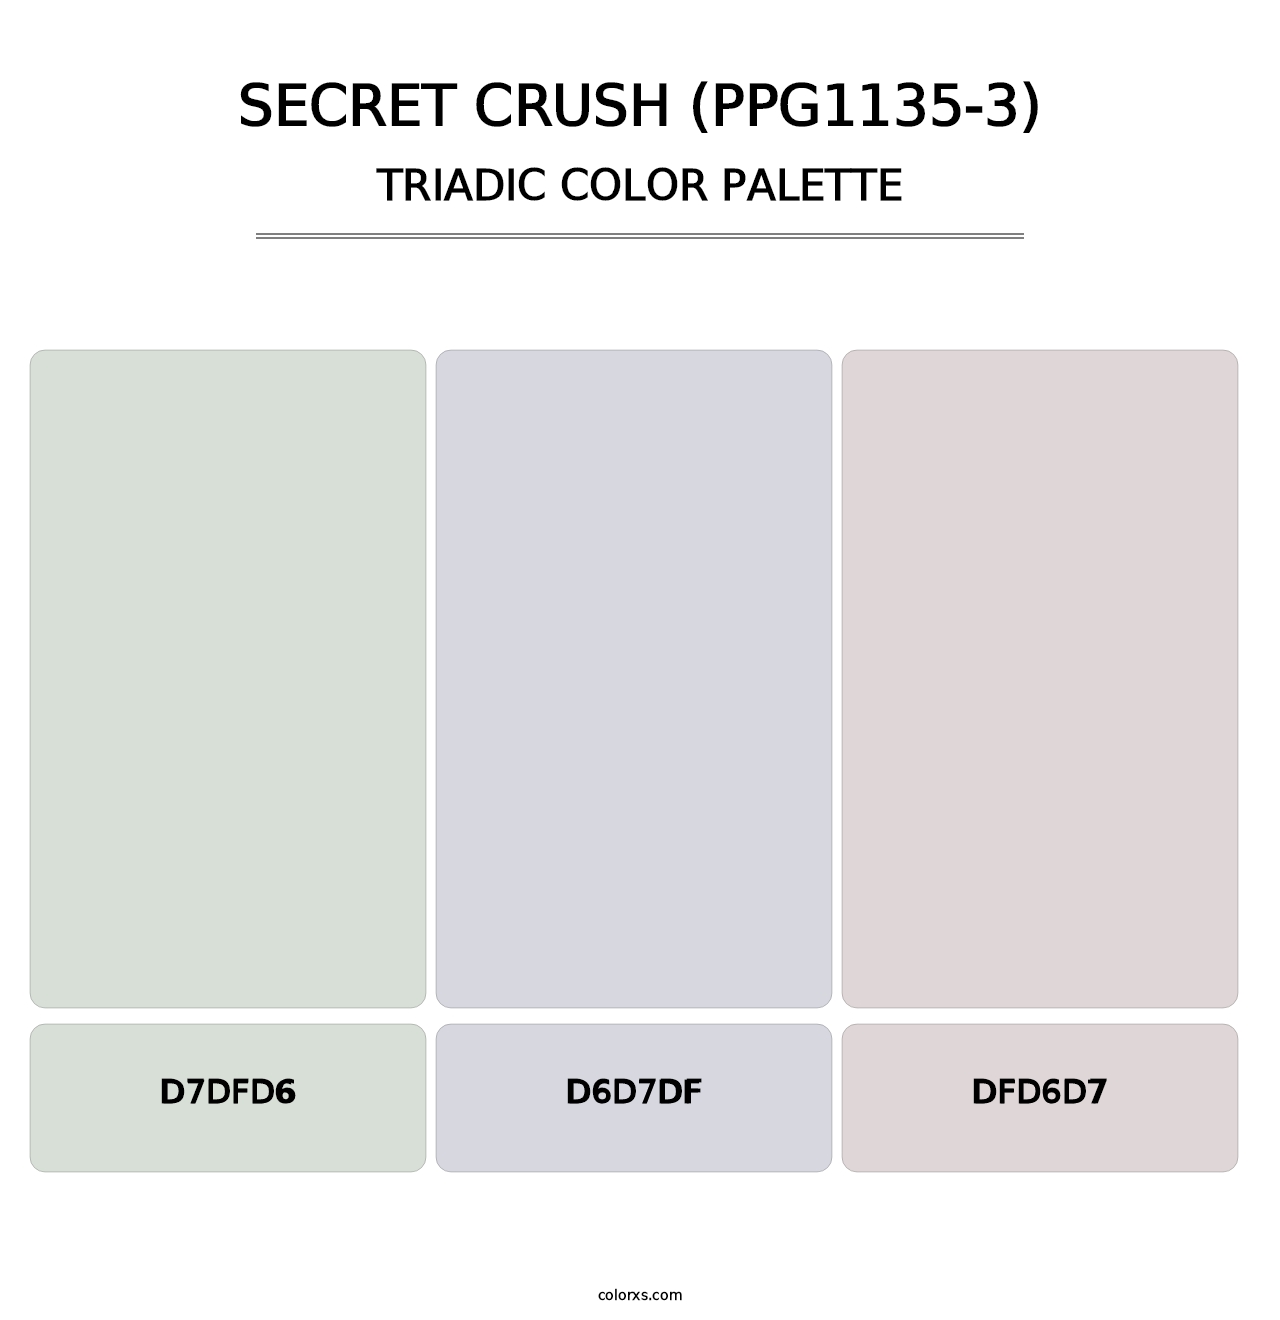 Secret Crush (PPG1135-3) - Triadic Color Palette